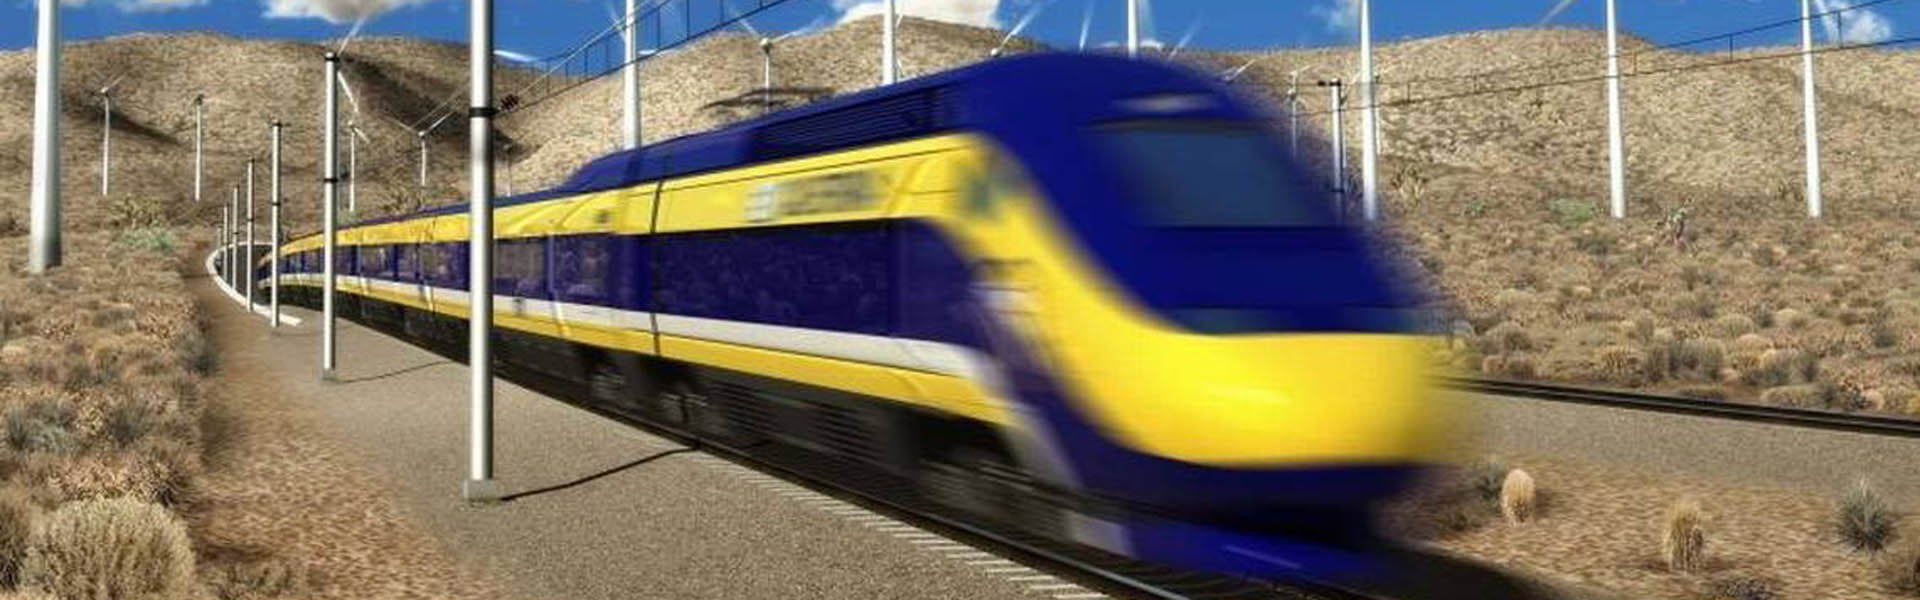 California’s High Speed Rail Escalates Eminent Domain Battles